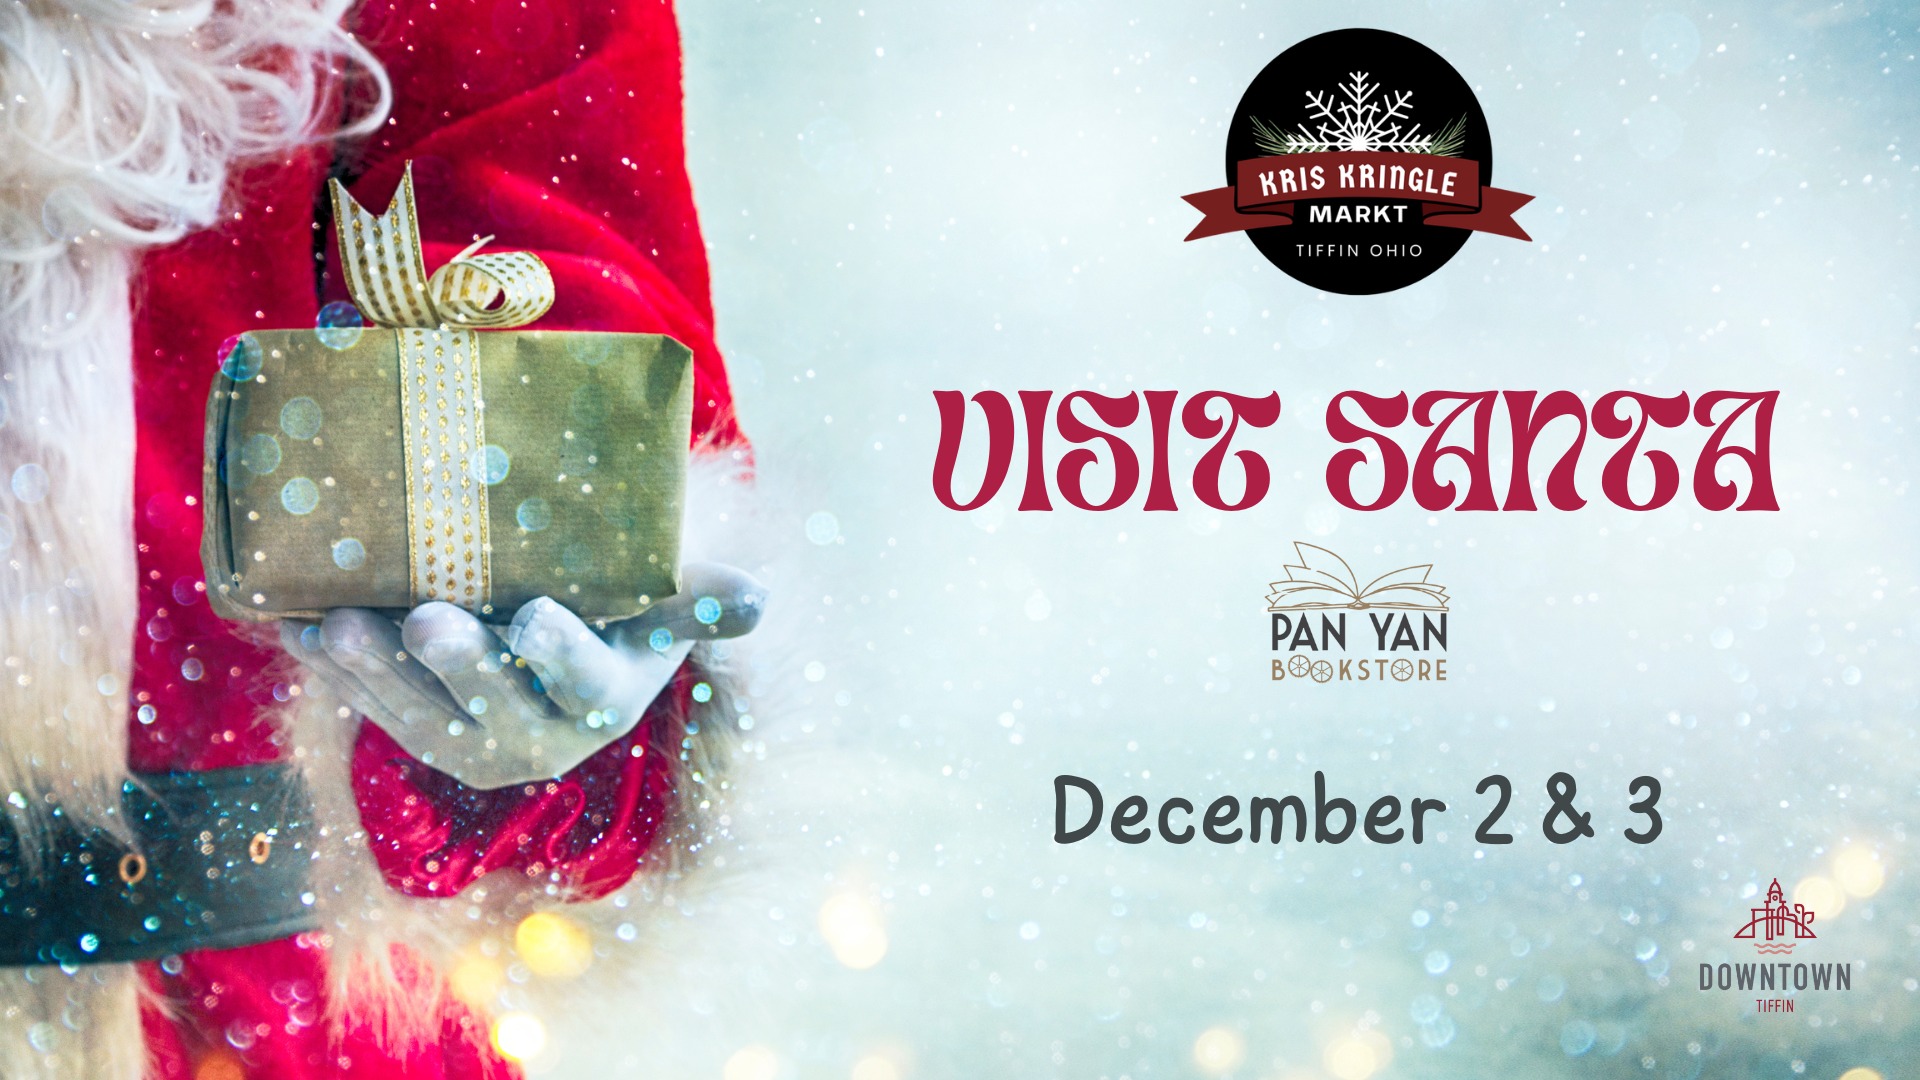 Kris Kringle Markt: Visit With Santa at Pan Yan Bookstore